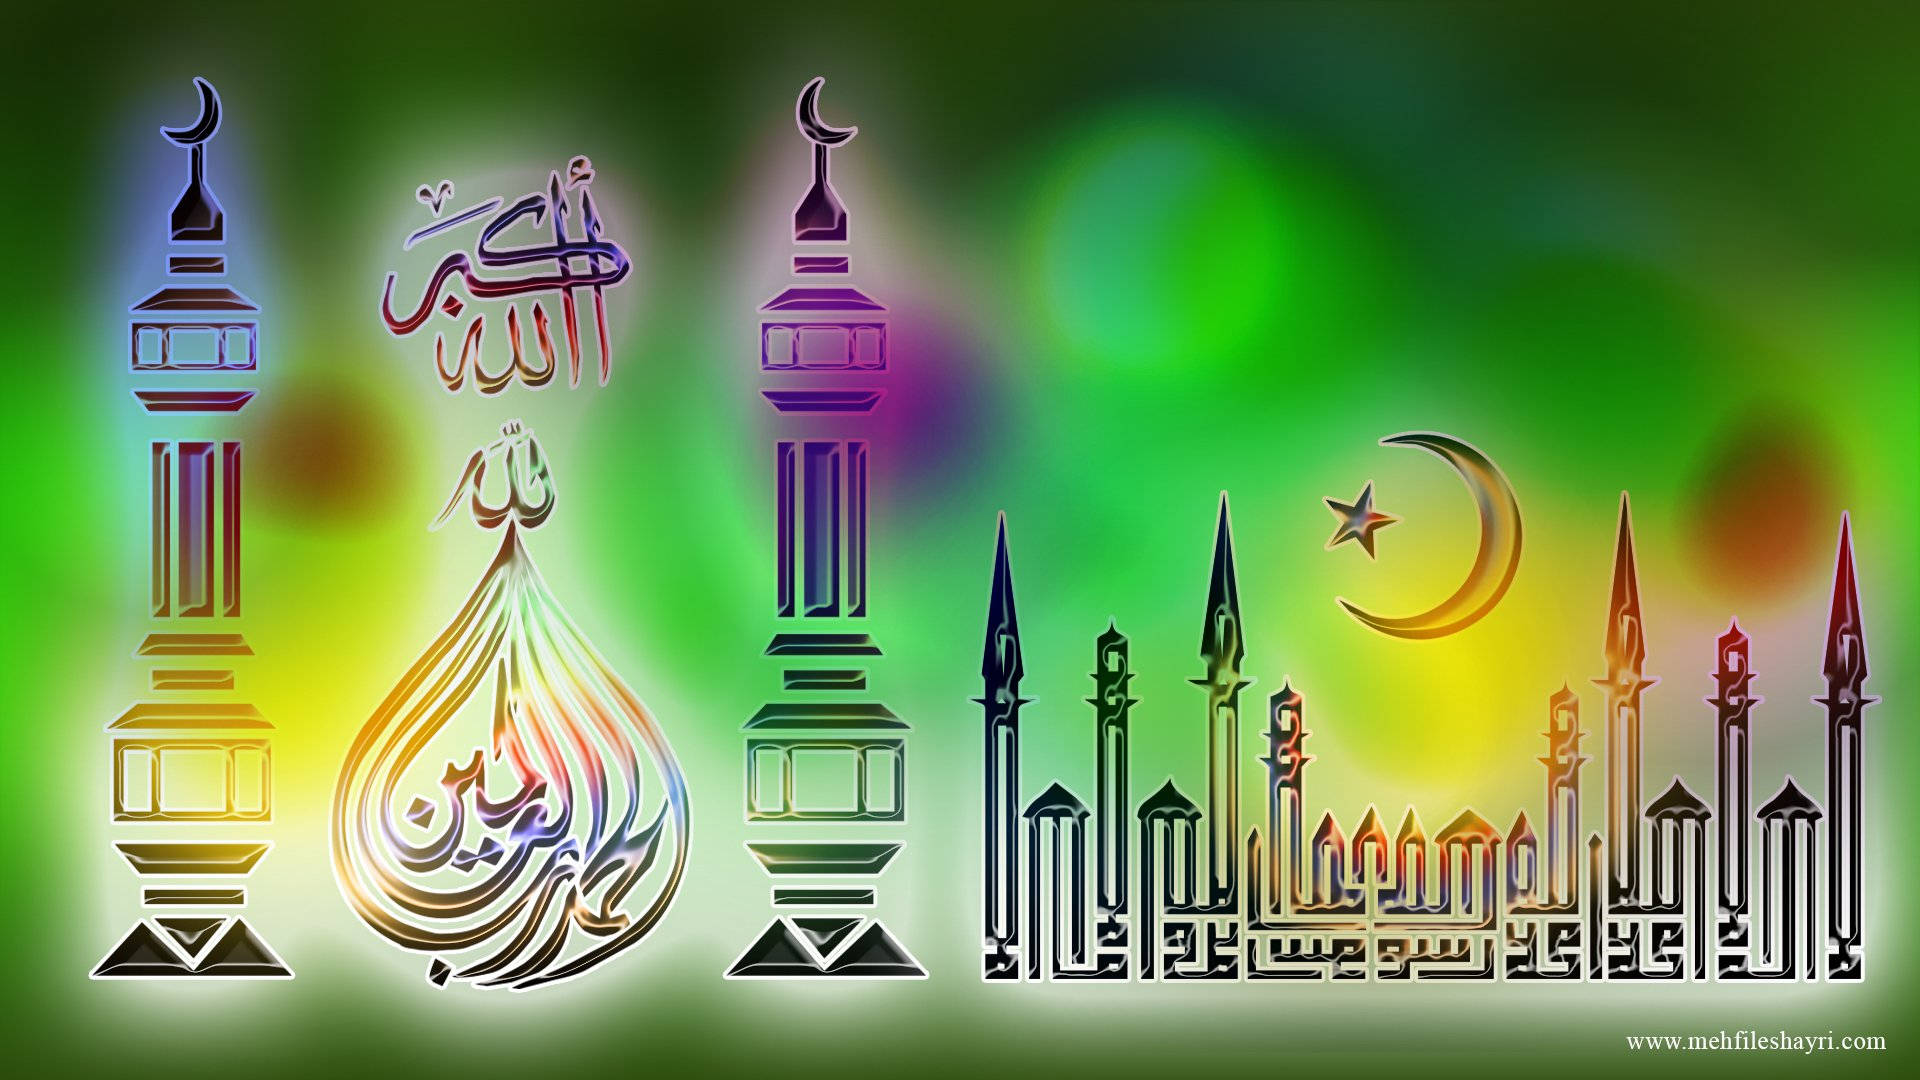 Hd Digital Islamic Art